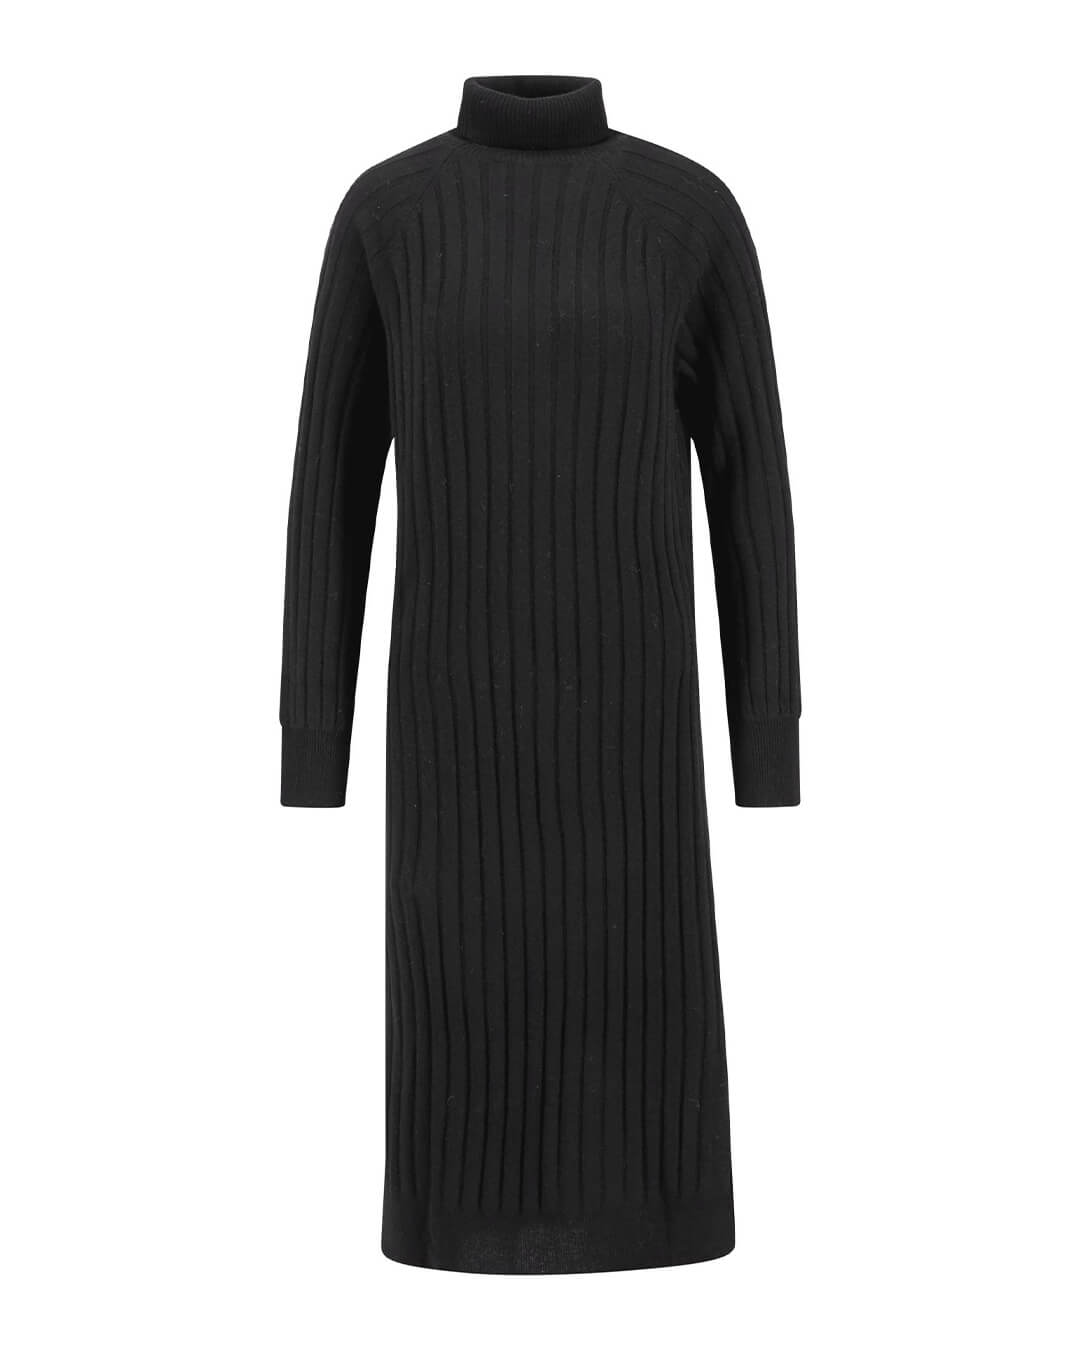 Fynch-Hatton Jumpers Fynch-Hatton Black Knitted Dress